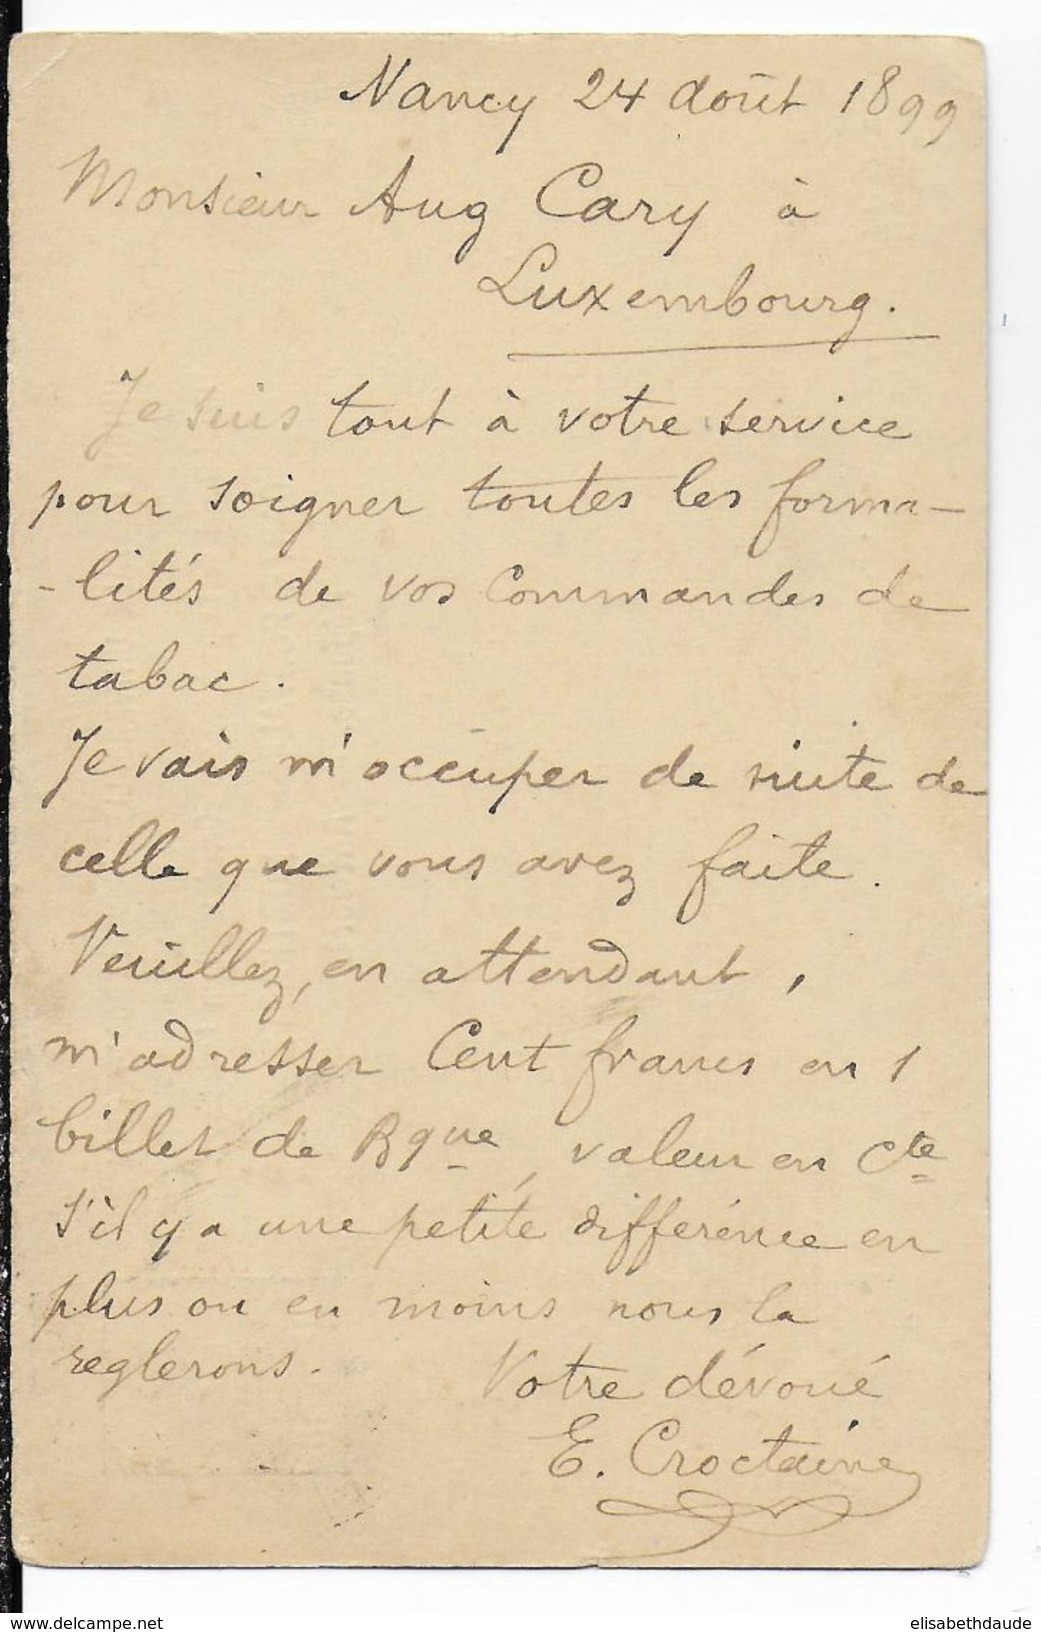 1899 - CARTE ENTIER REPONSE Du LUXEMBOURG Avec OBLITERATION NANCY (MEURTHE ET MOSELLE) - Postwaardestukken